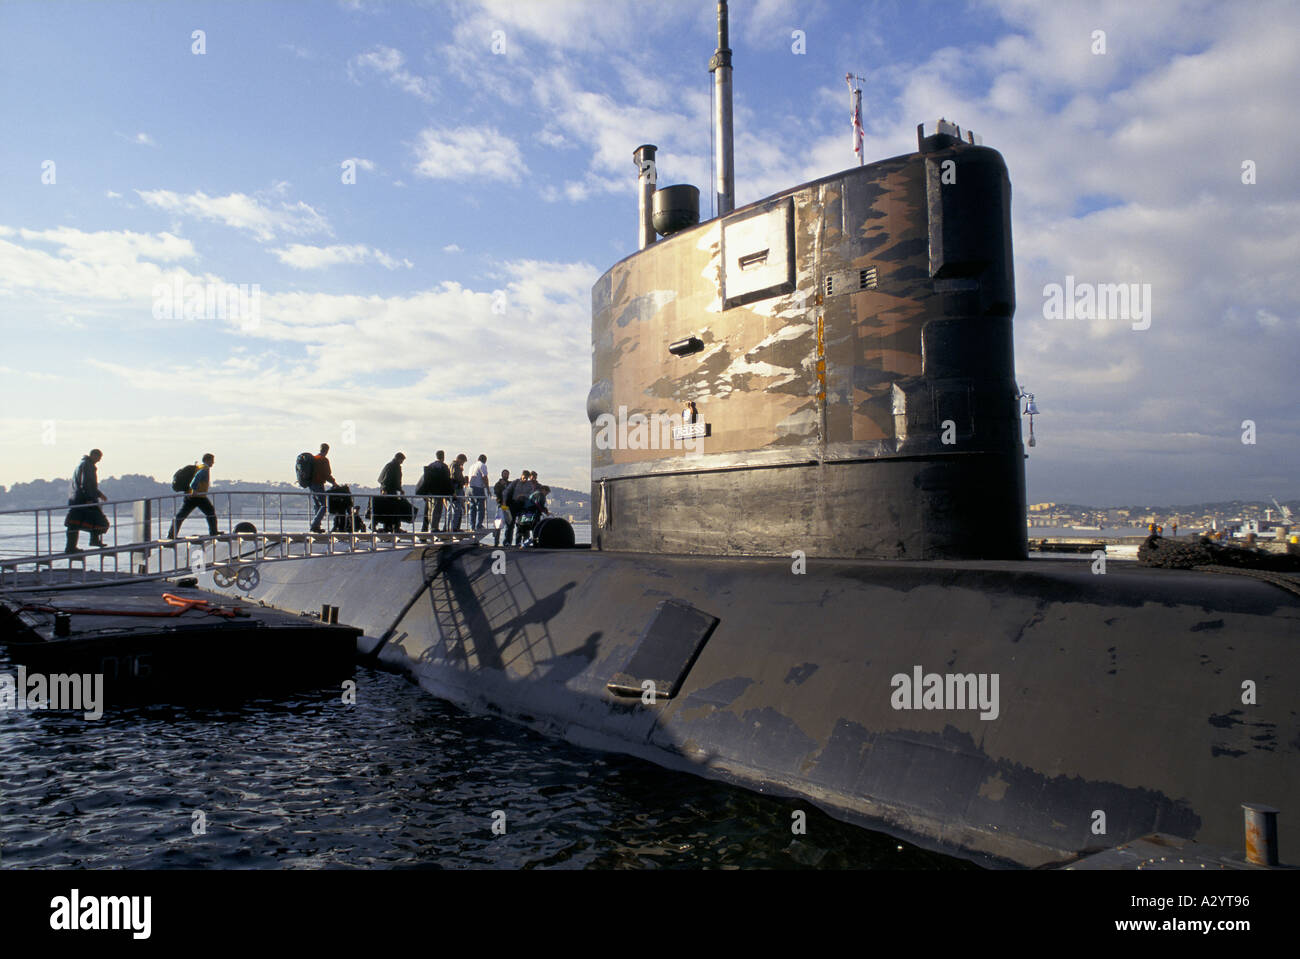 crew boarding submarine at port Stock Photo